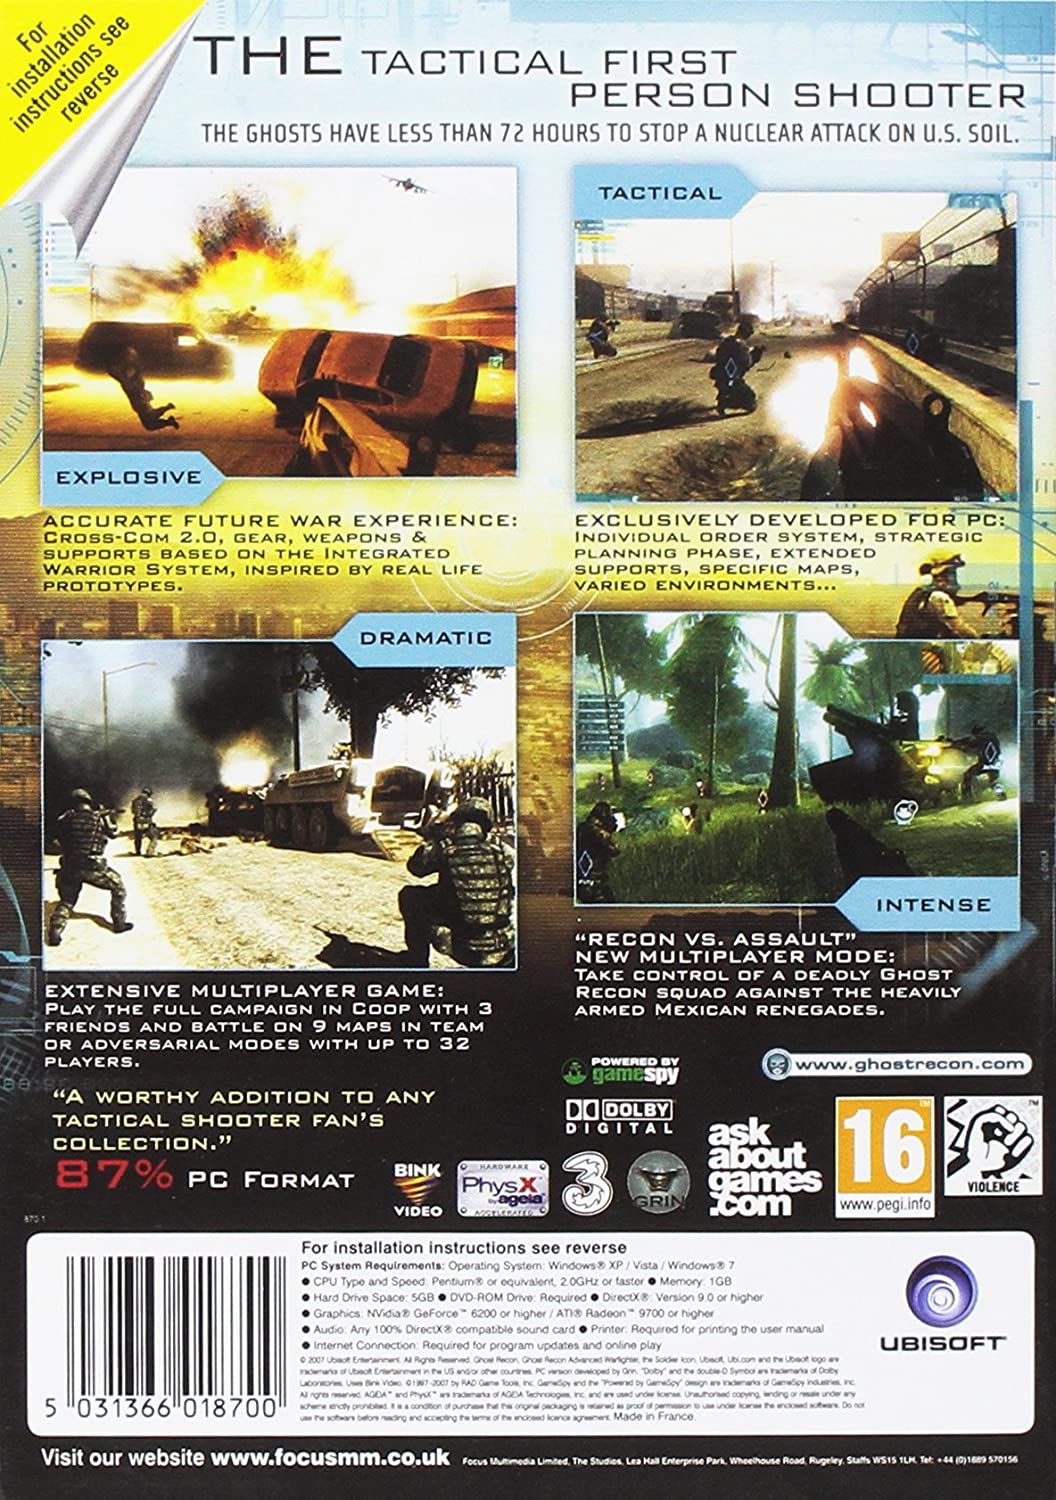 Tom Clancy's Ghost Recon Advanced Warfighter 2 (PC DVD)